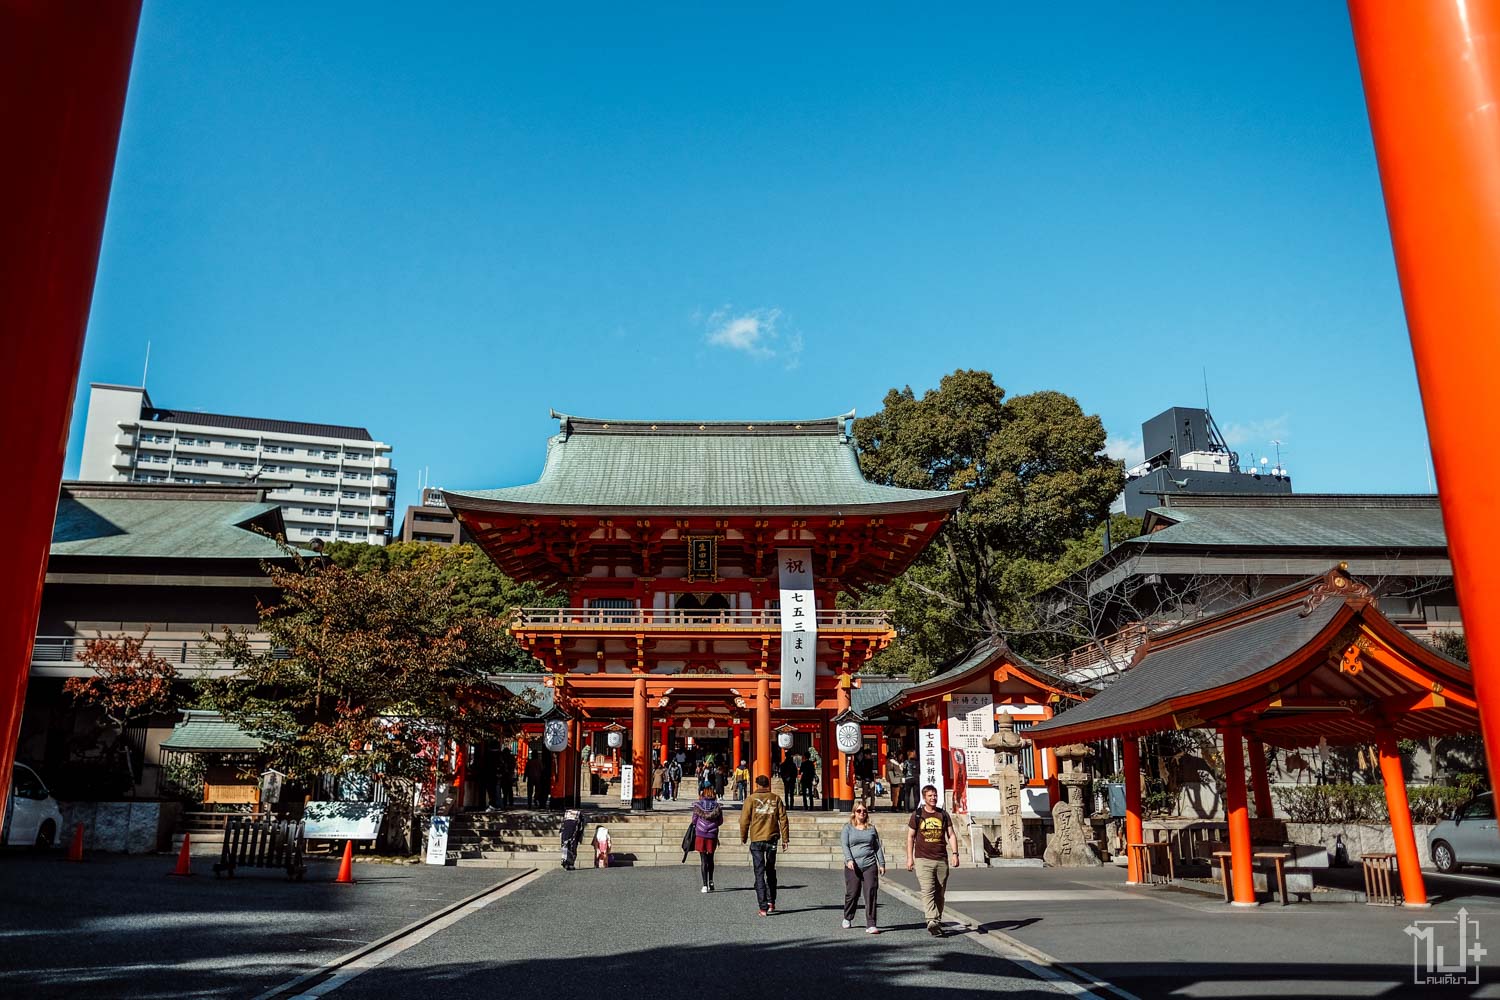 #Okayama #HimejiCastle #BitchuMatuyamaCastle #HomeStay #Kansai #Japan #MaikoMarinePromenade #KojimaJeansStreet #Kobe #HelloKittyShowBox #ShizutaniSchool #สวนไมโกะ #สะพานที่ยาวที่สุดในโลก #โอคายาม่า #คันไซ #ที่เที่ยวโอคายาม่า #นอนโฮมสเตย์ญี่ปุ่น #โฮมสเตย์ญี่ปุ่น #โฮมสเตย์โอคายาม่า #ปราสาทลอยฟ้า #ปราสาทบิจจูมัตสึยามะ #ทะเลหมอก #ทะเลหมอกญี่ปุ่น #จุดชมทะเลหมอกอุนไค #รีวิวญี่ปุ่น #เที่ยวญี่ปุ่น #โคจิมะยีนส์สตรีท #คุราชิคิ #เนื้อโกเบ #ปราสาทฮิเมจิ #โรงเรียนเก่าชิซึทานิ